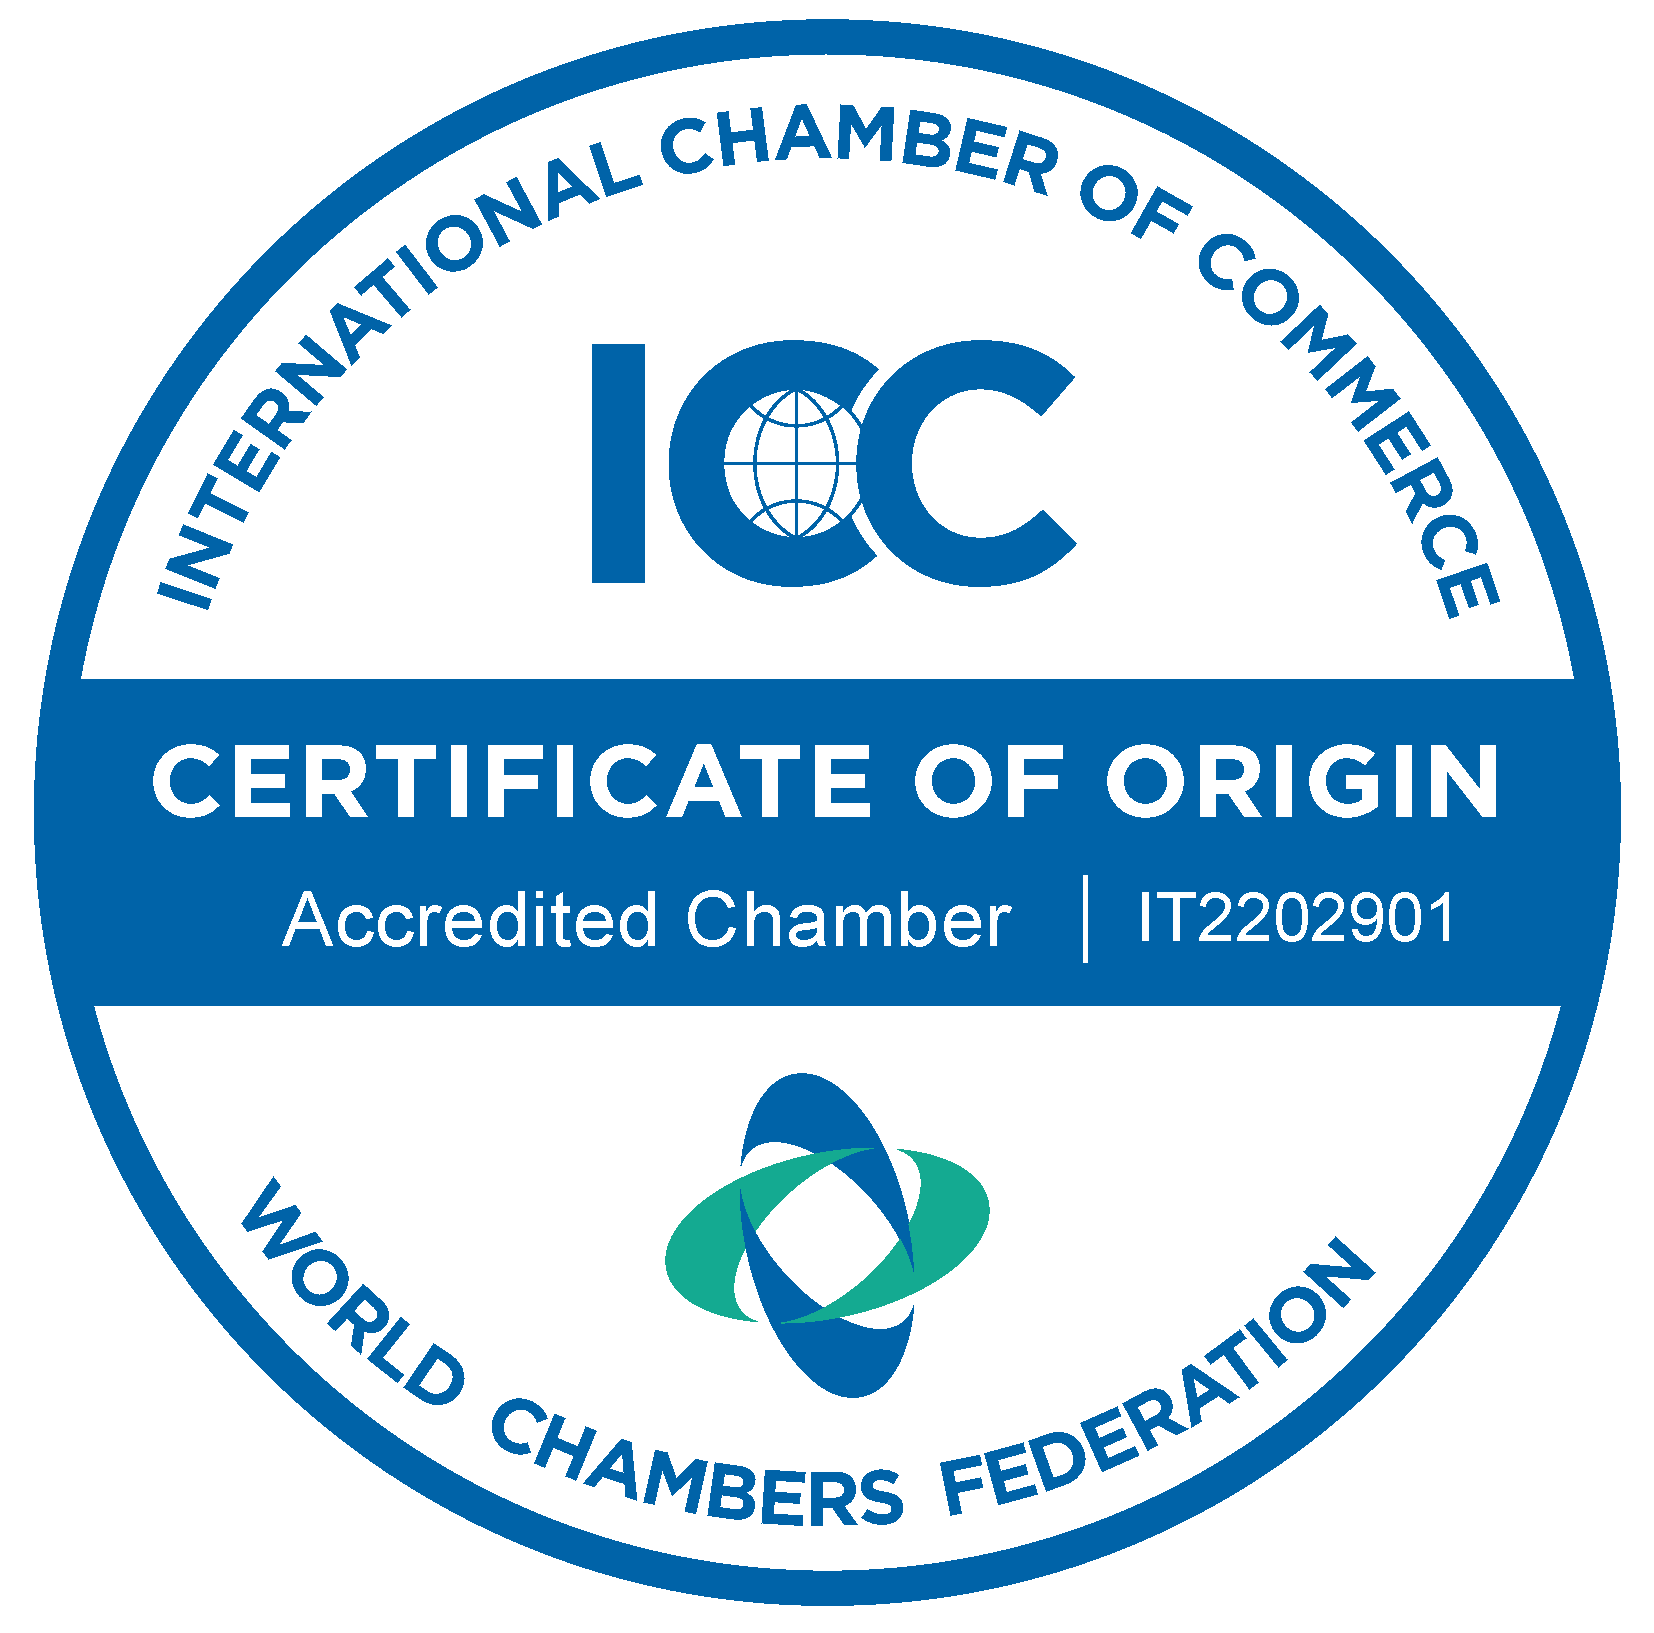 Rete internazionale della International Chamber of Commerce / World Chambers Federation